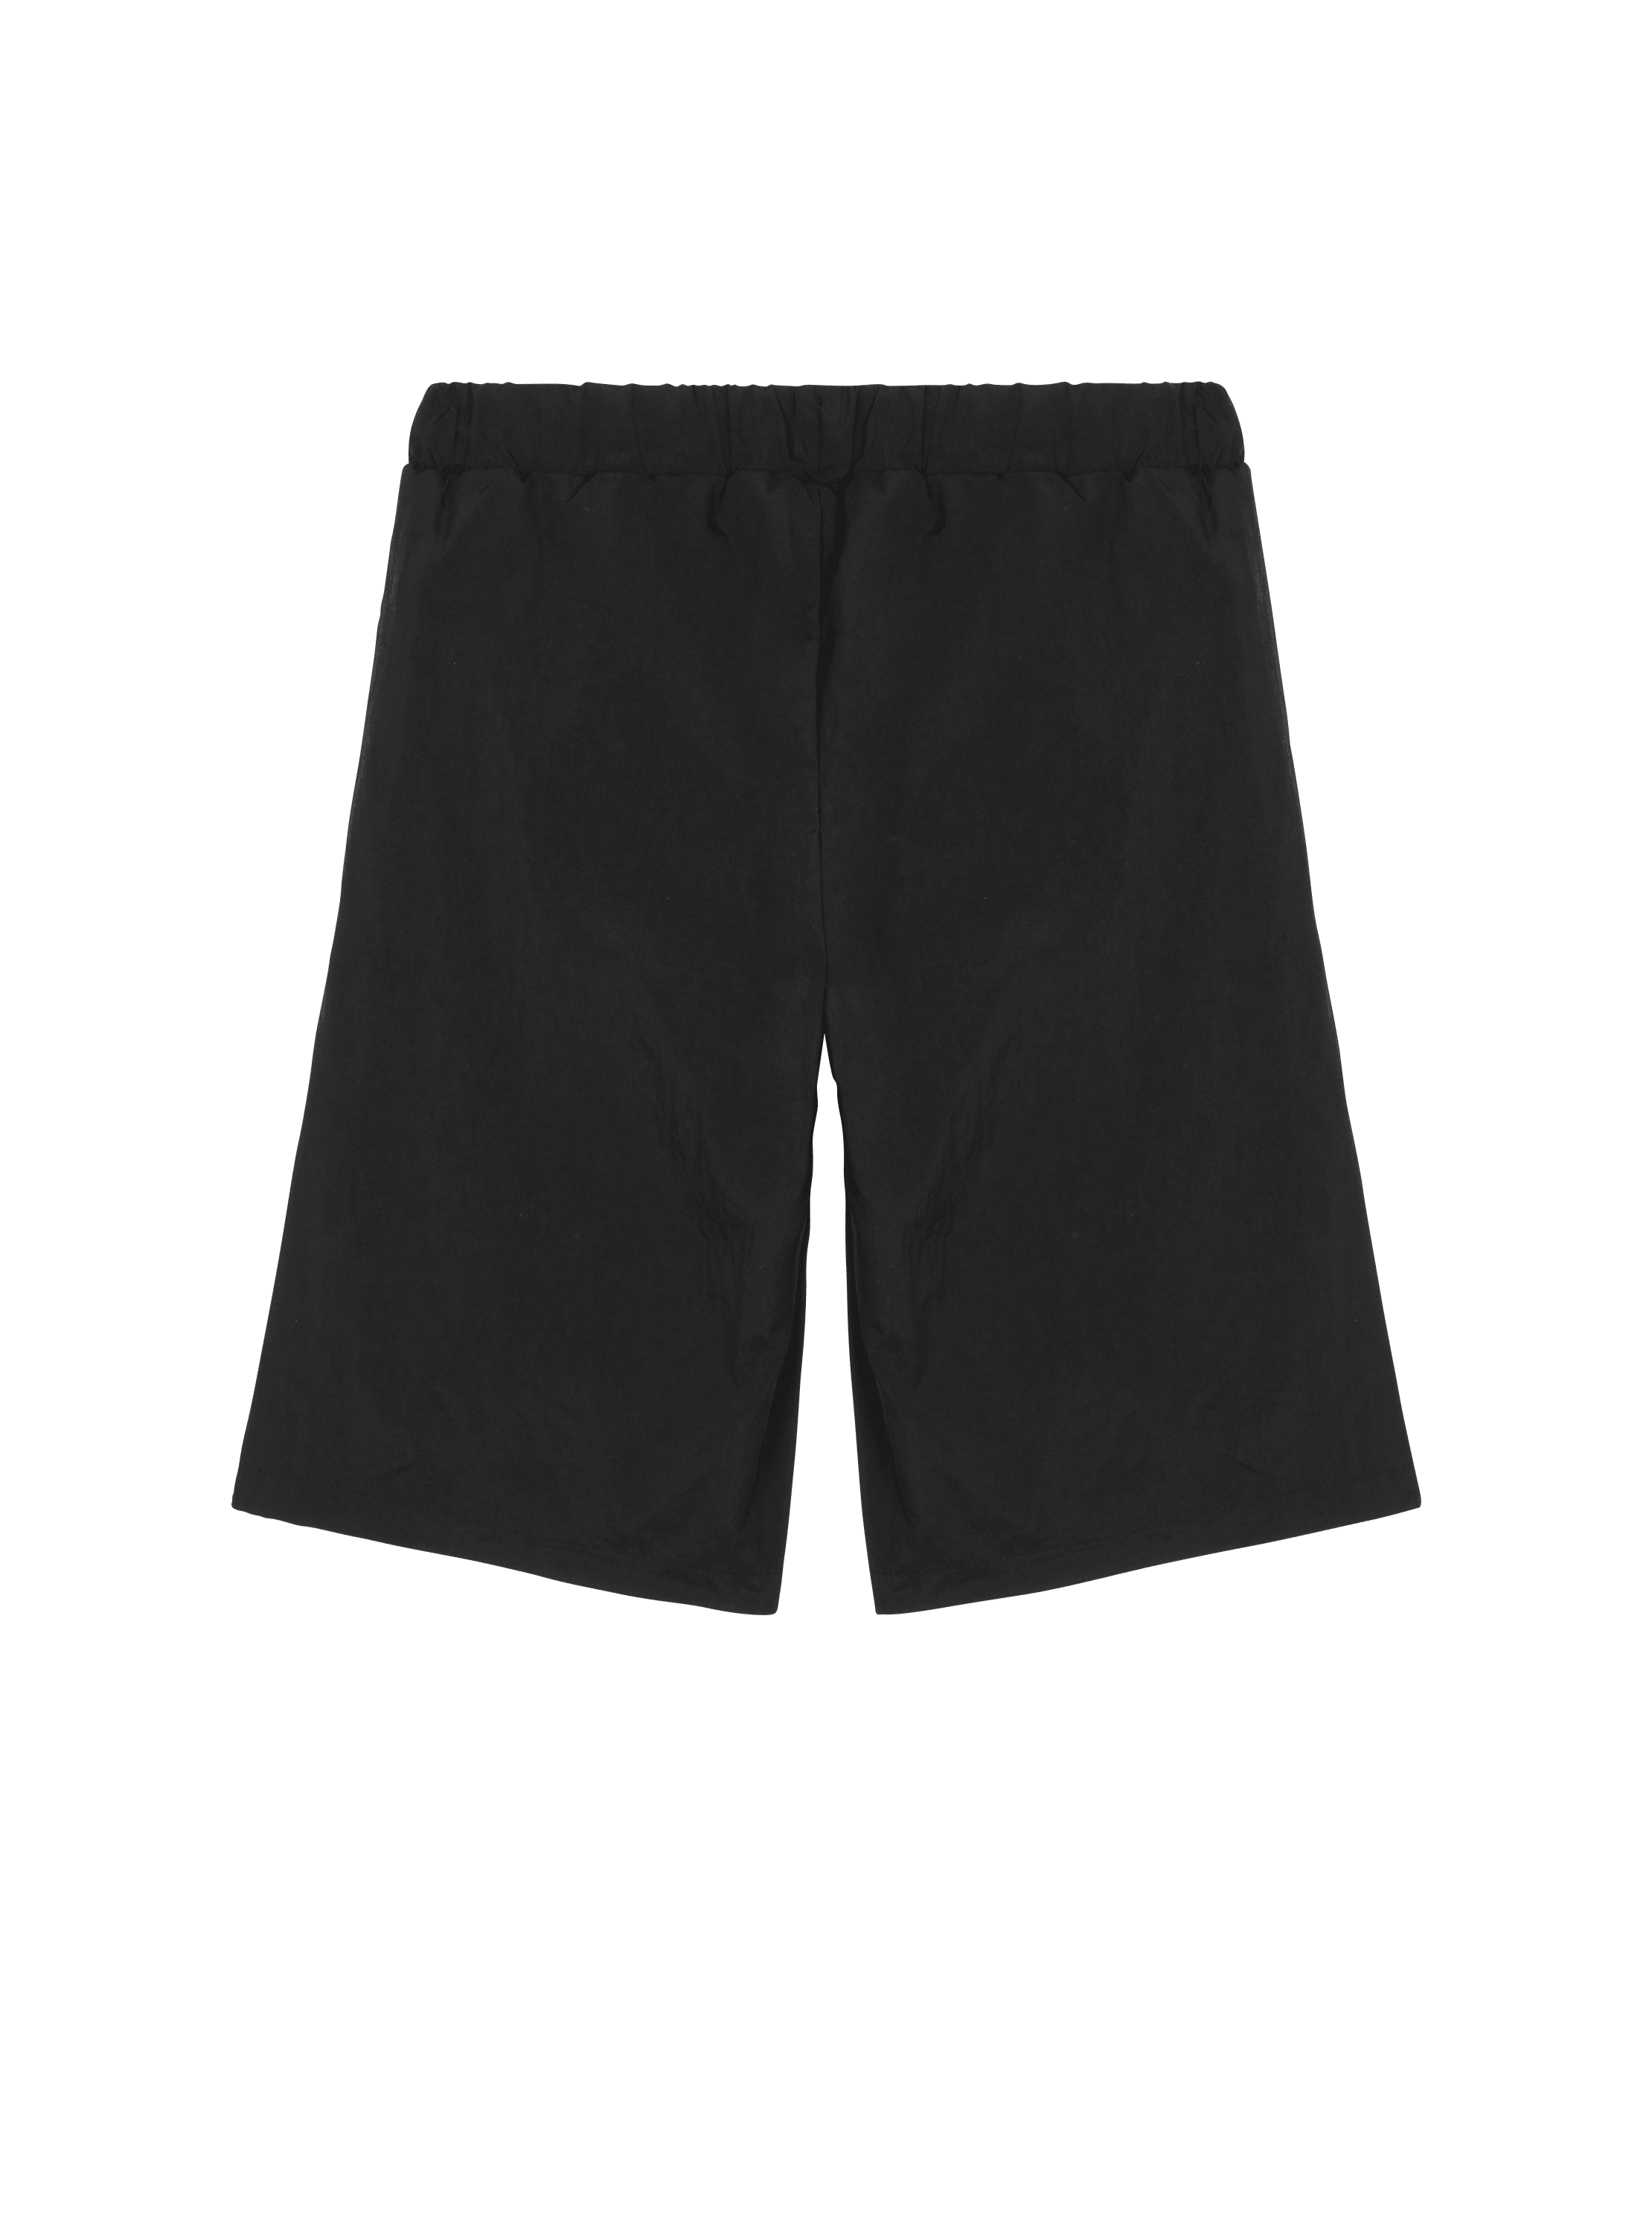 Child BALMAIN logo | swim black - Balmain shorts